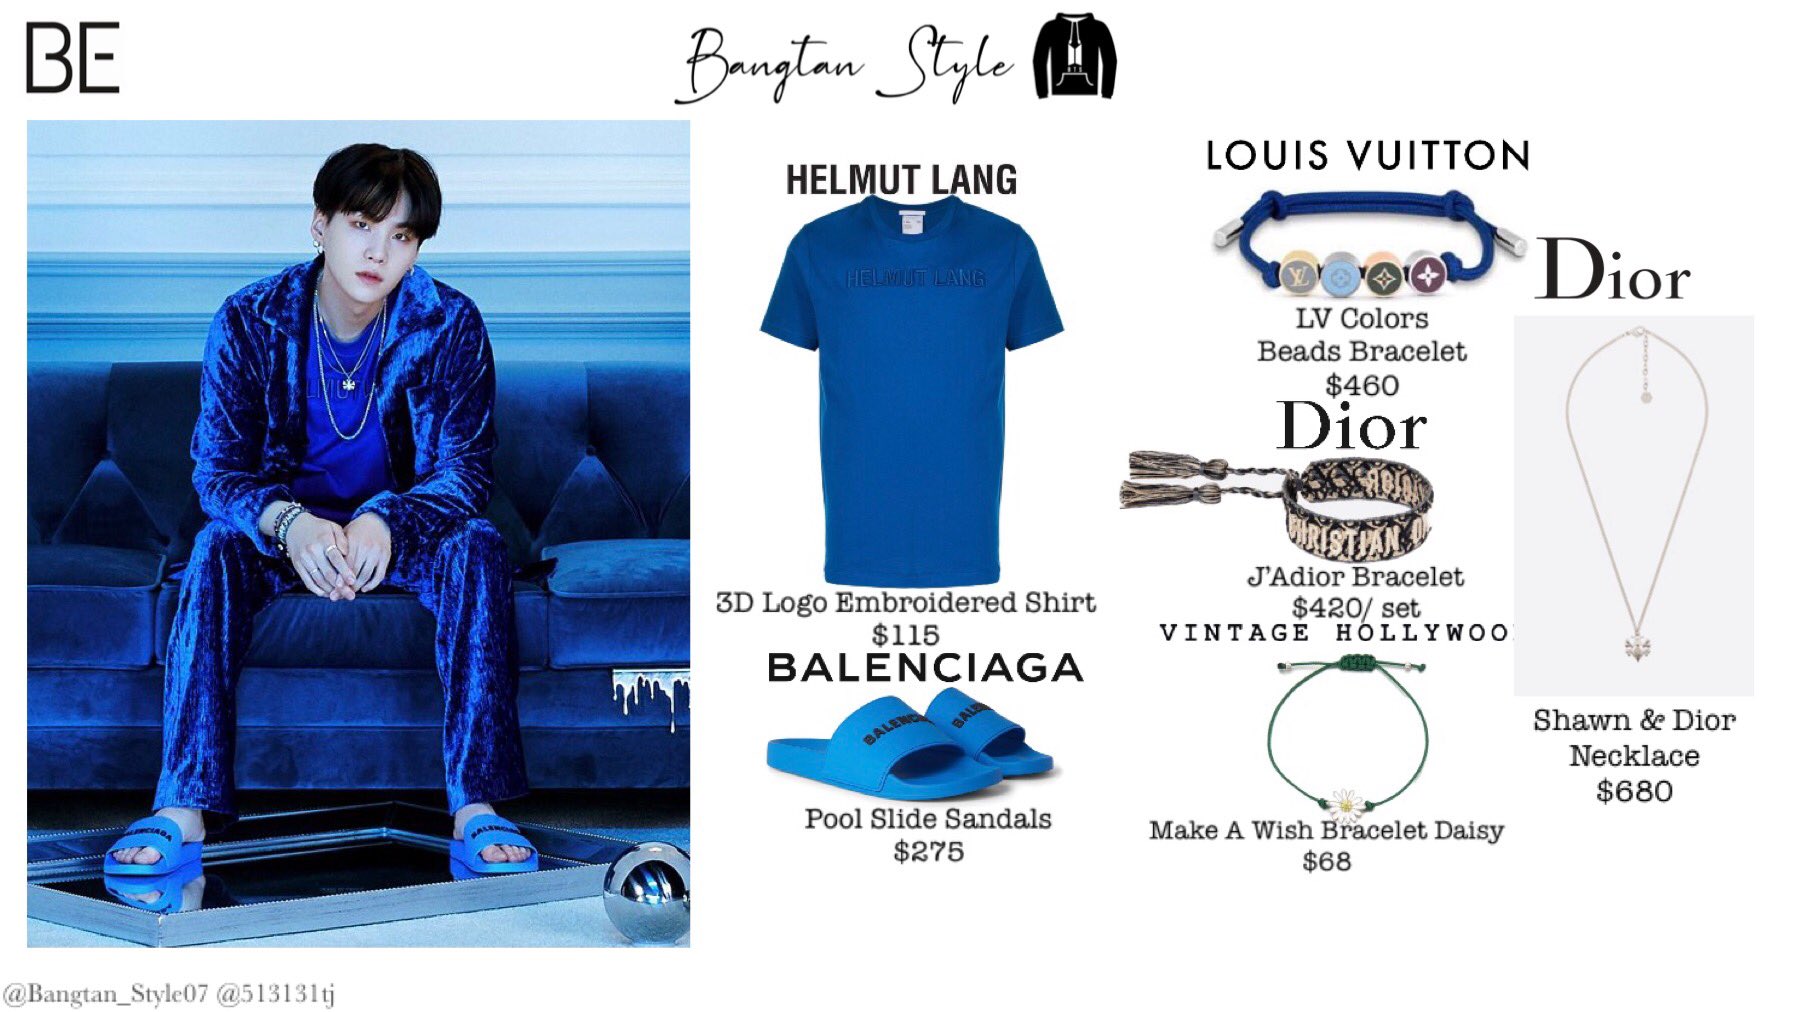 Bangtan Style⁷ (slow) on X: BTS BE CONCEPT PHOTO Yoongi wears Helmut Lang  Shirt ($115), BALENCIAGA sandals ($275), LOUIS VUITTON bracelet($460),  Vintage Hollywood Bracelet ($68), Dior Bracelet ($420/set) & necklace  ($680). #Curated_by_BTS #